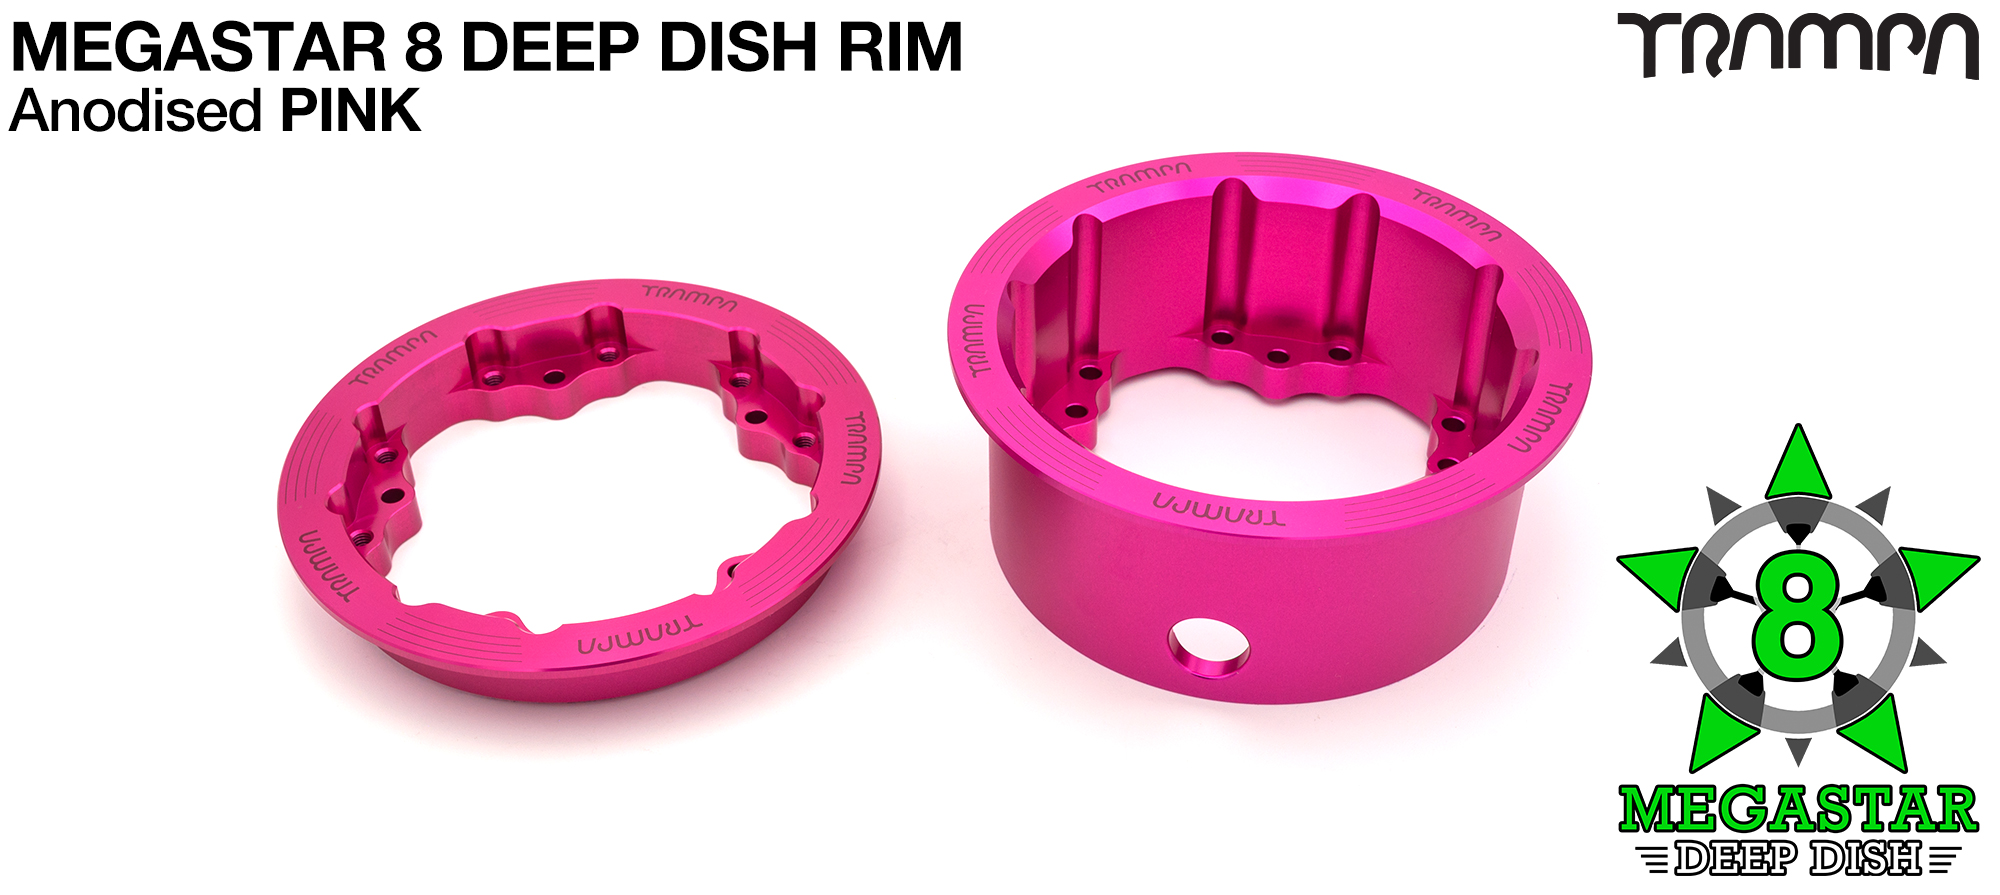 3.75x 2.5 Inch DEEP-DISH MEGASTAR Rims - PINK 